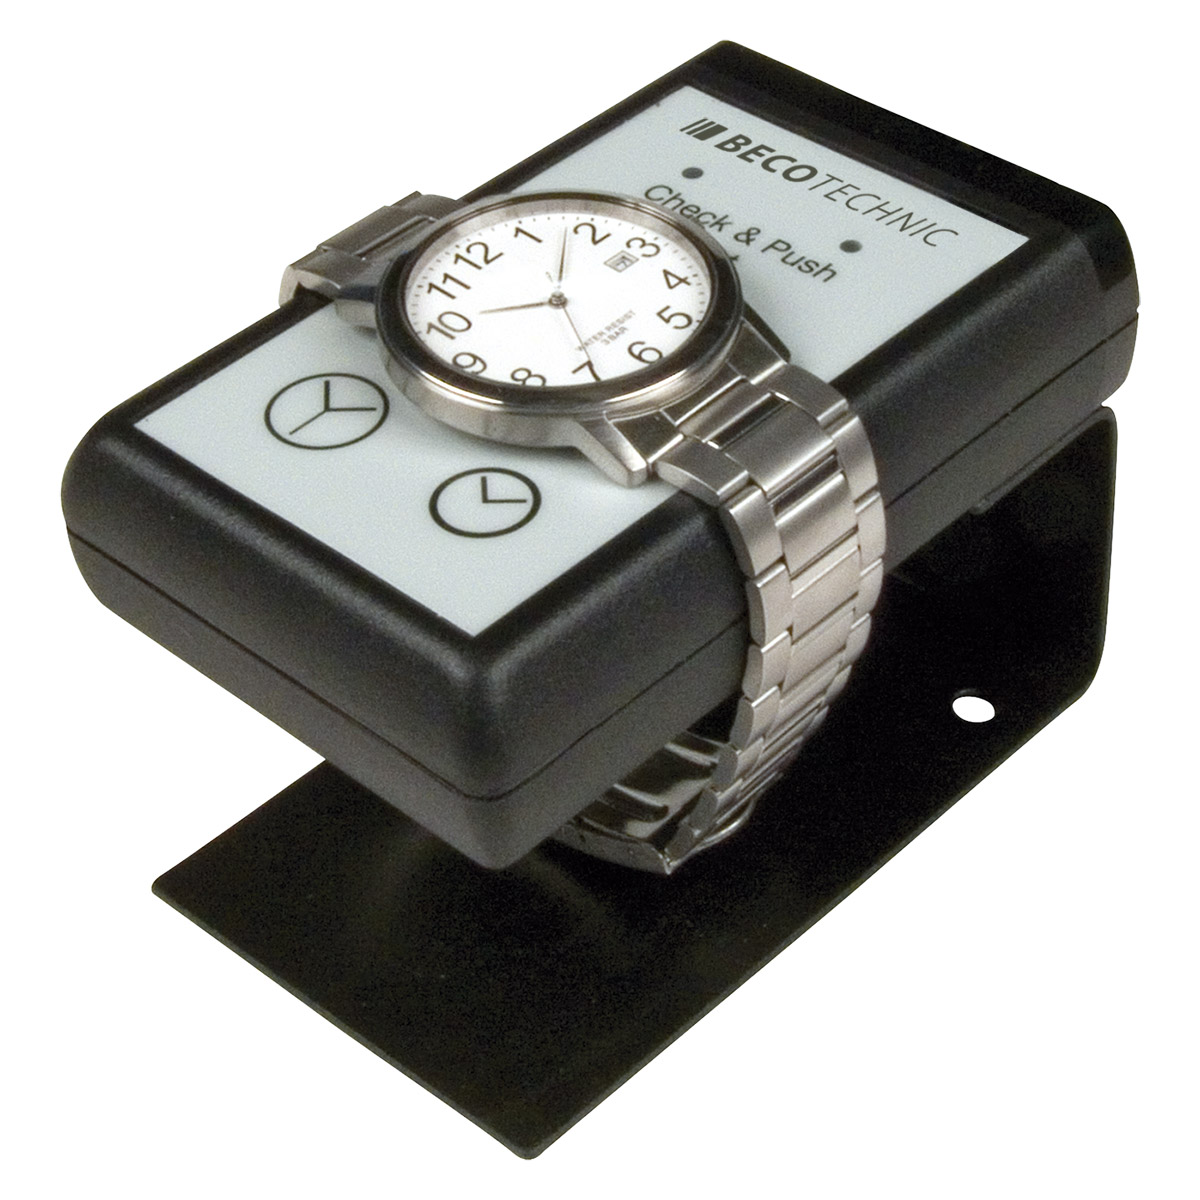 Check & Push test apparaat voor quartz horloges